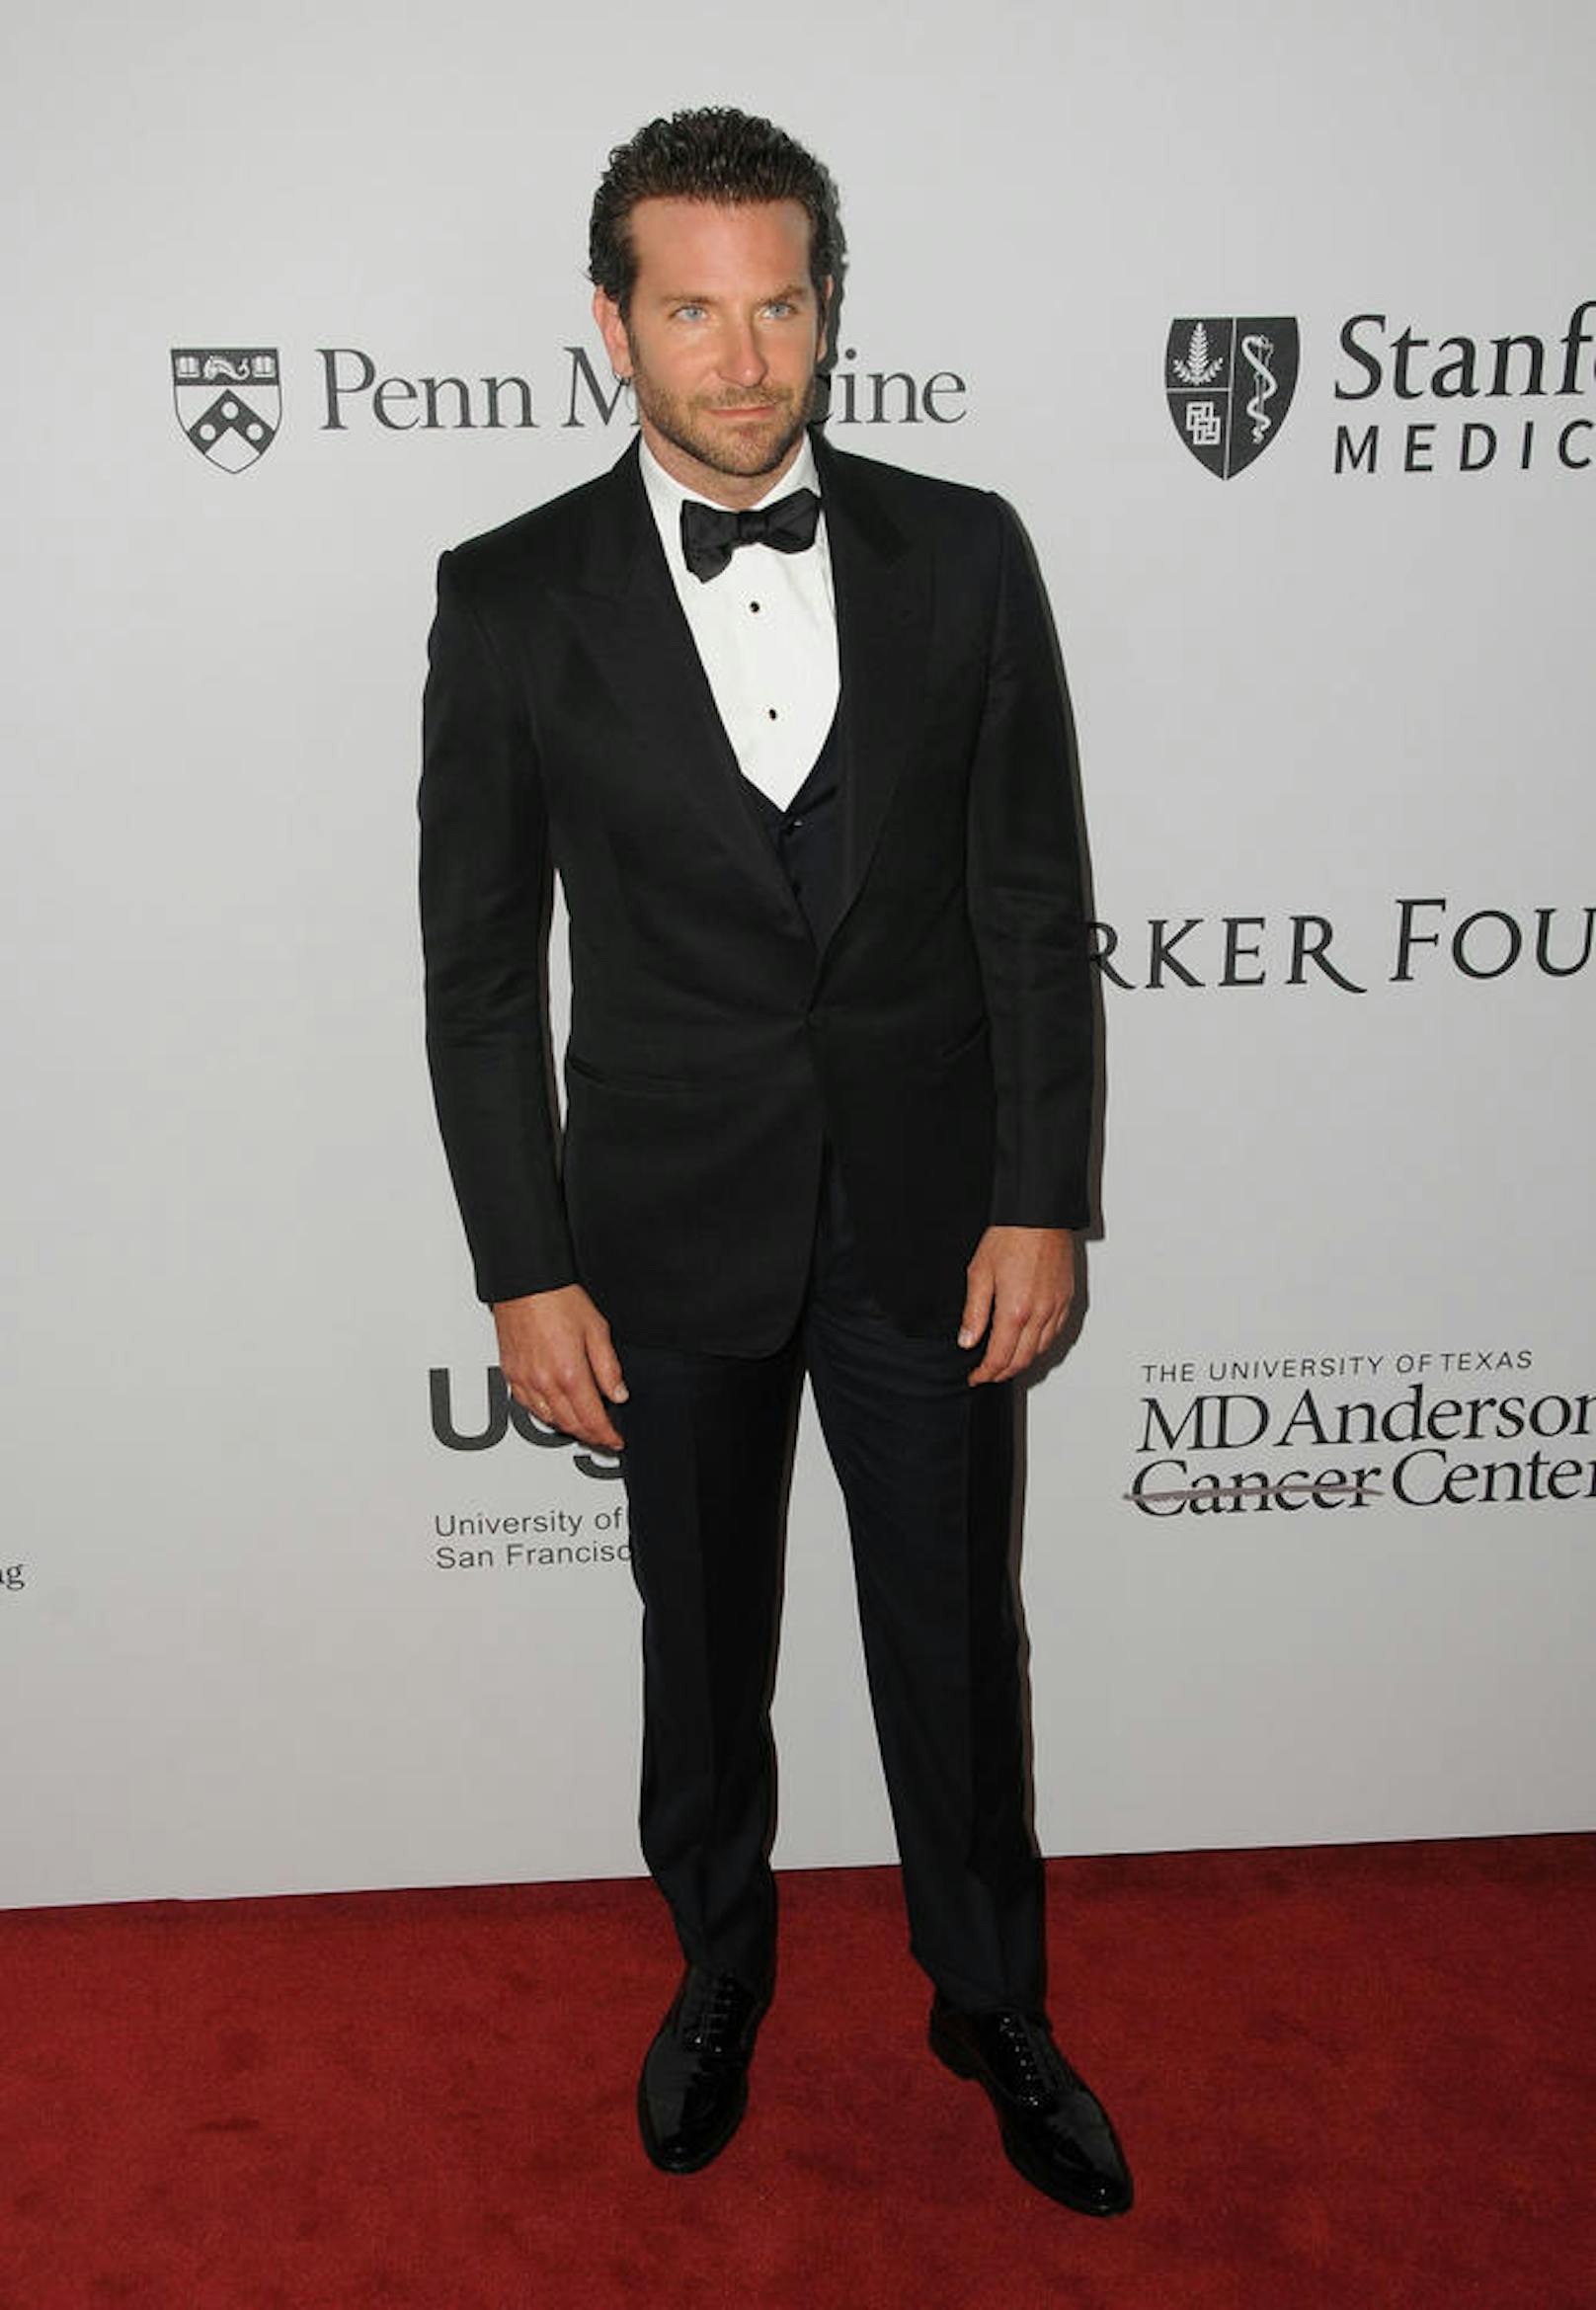 2011: Bradley Cooper